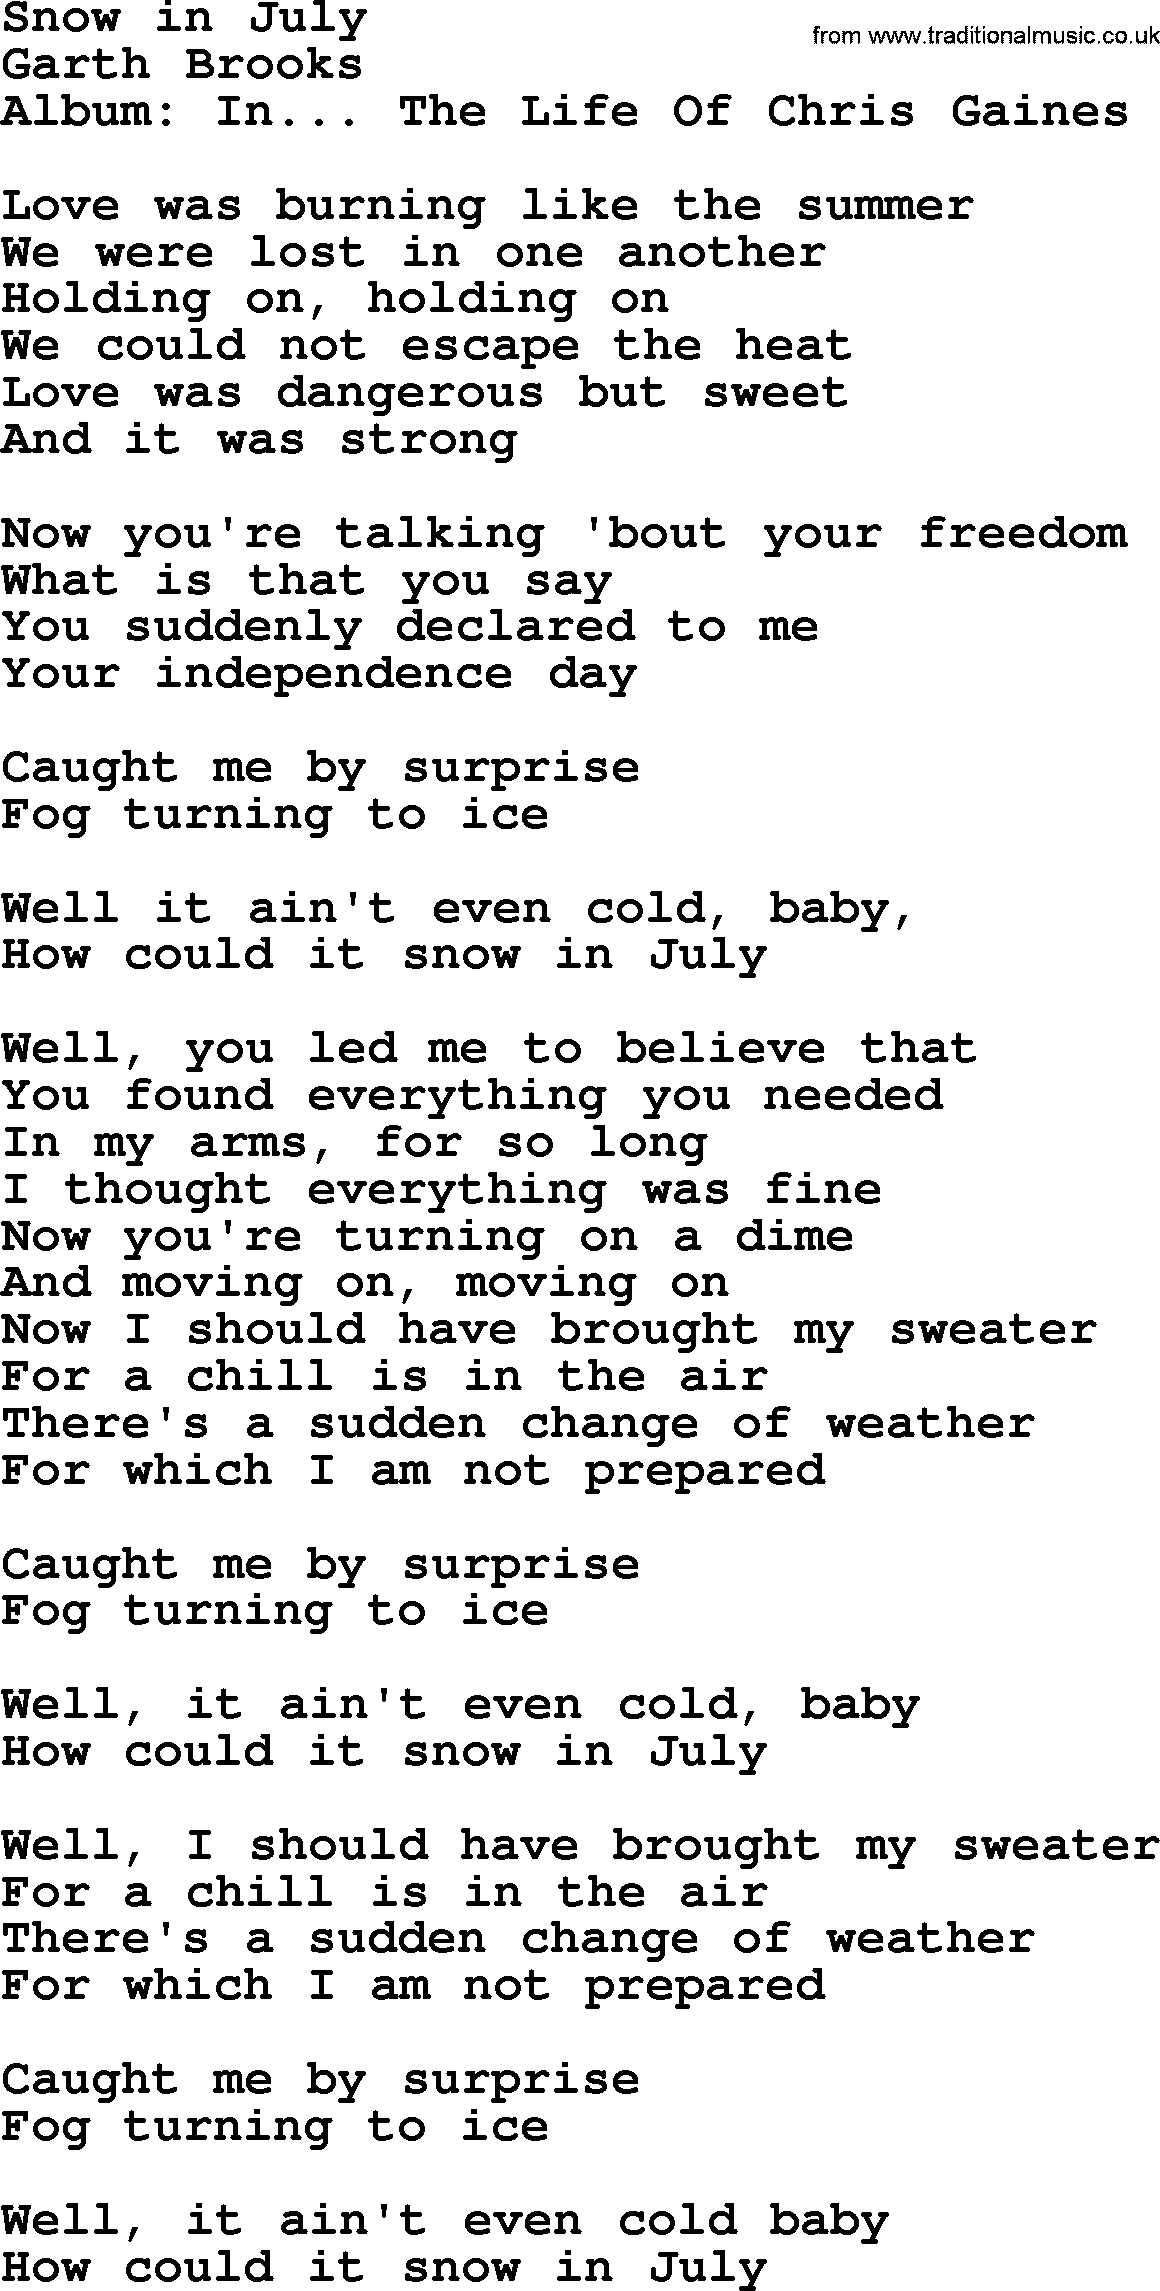 Garth Brooks song: Snow In July, lyrics